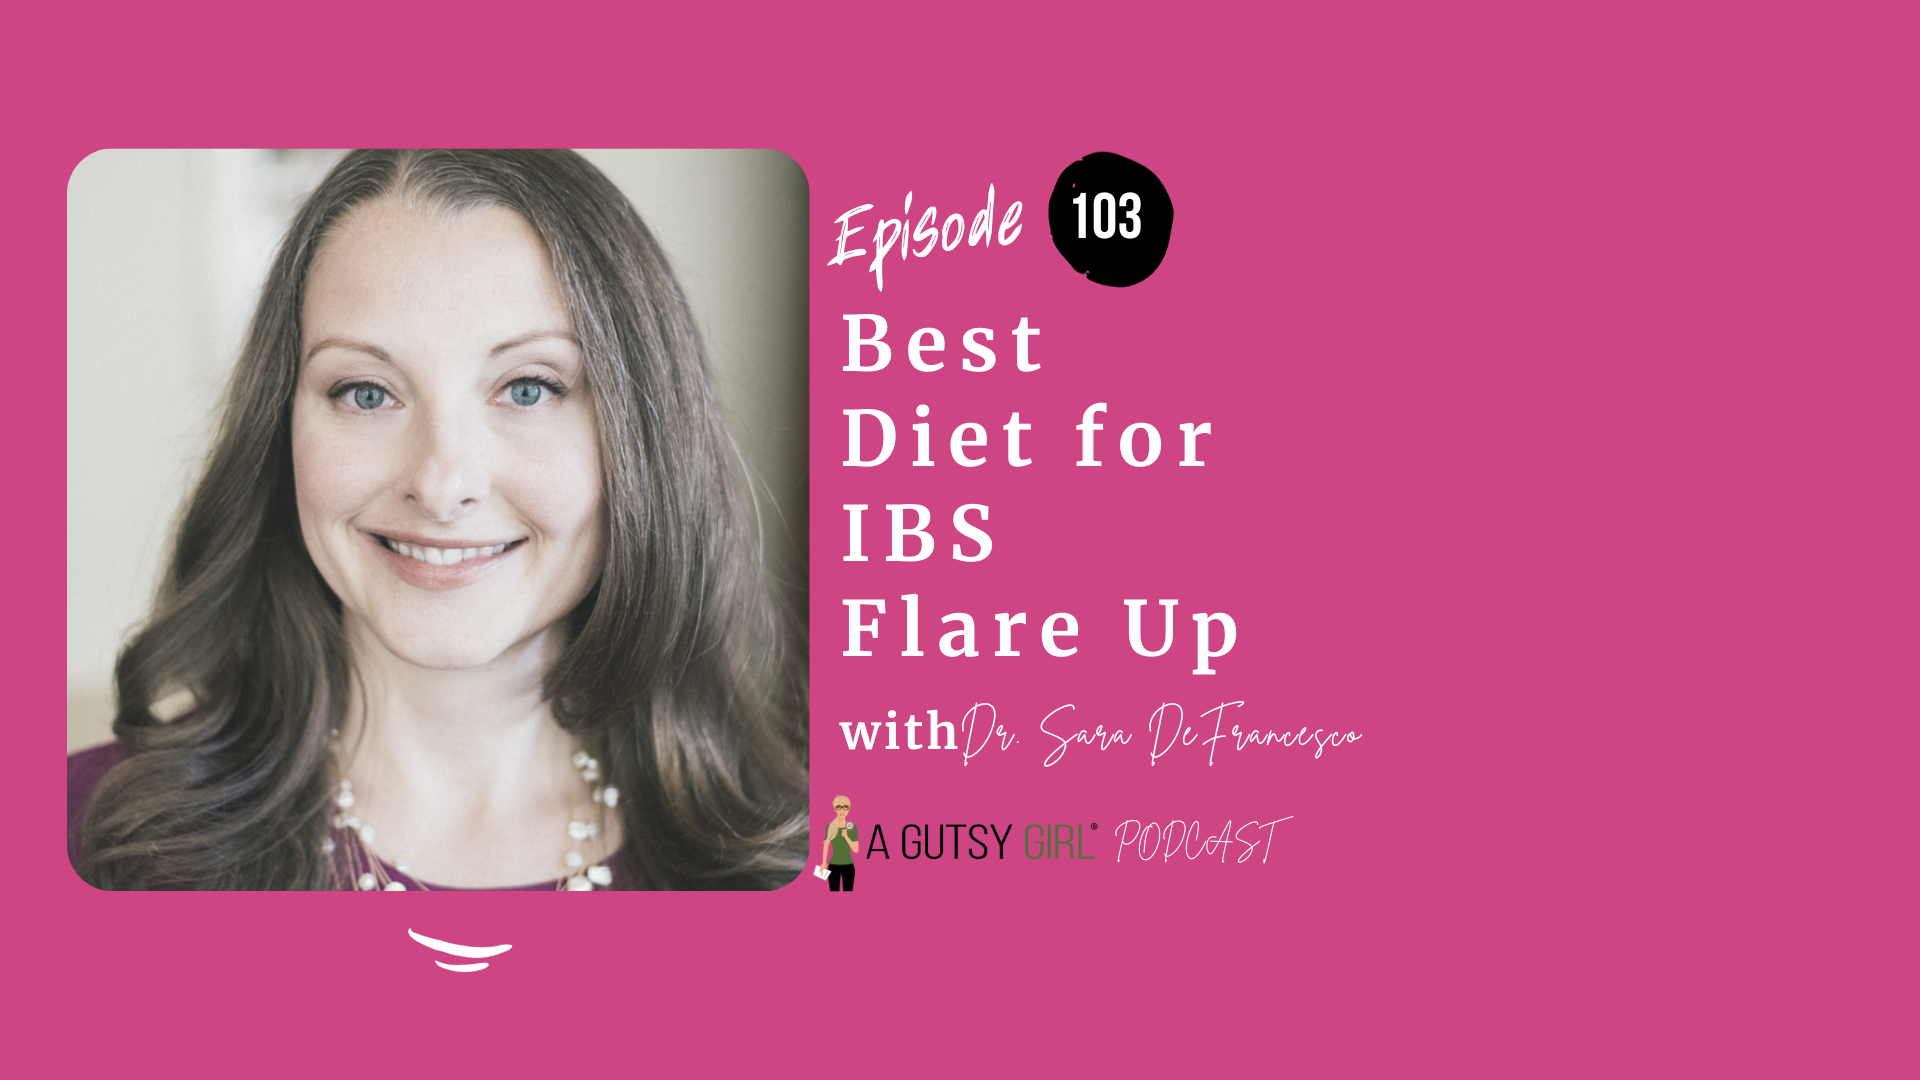 Best Diet for IBS Flare Up (Episode 103 with Dr. Sara DeFrancesco)